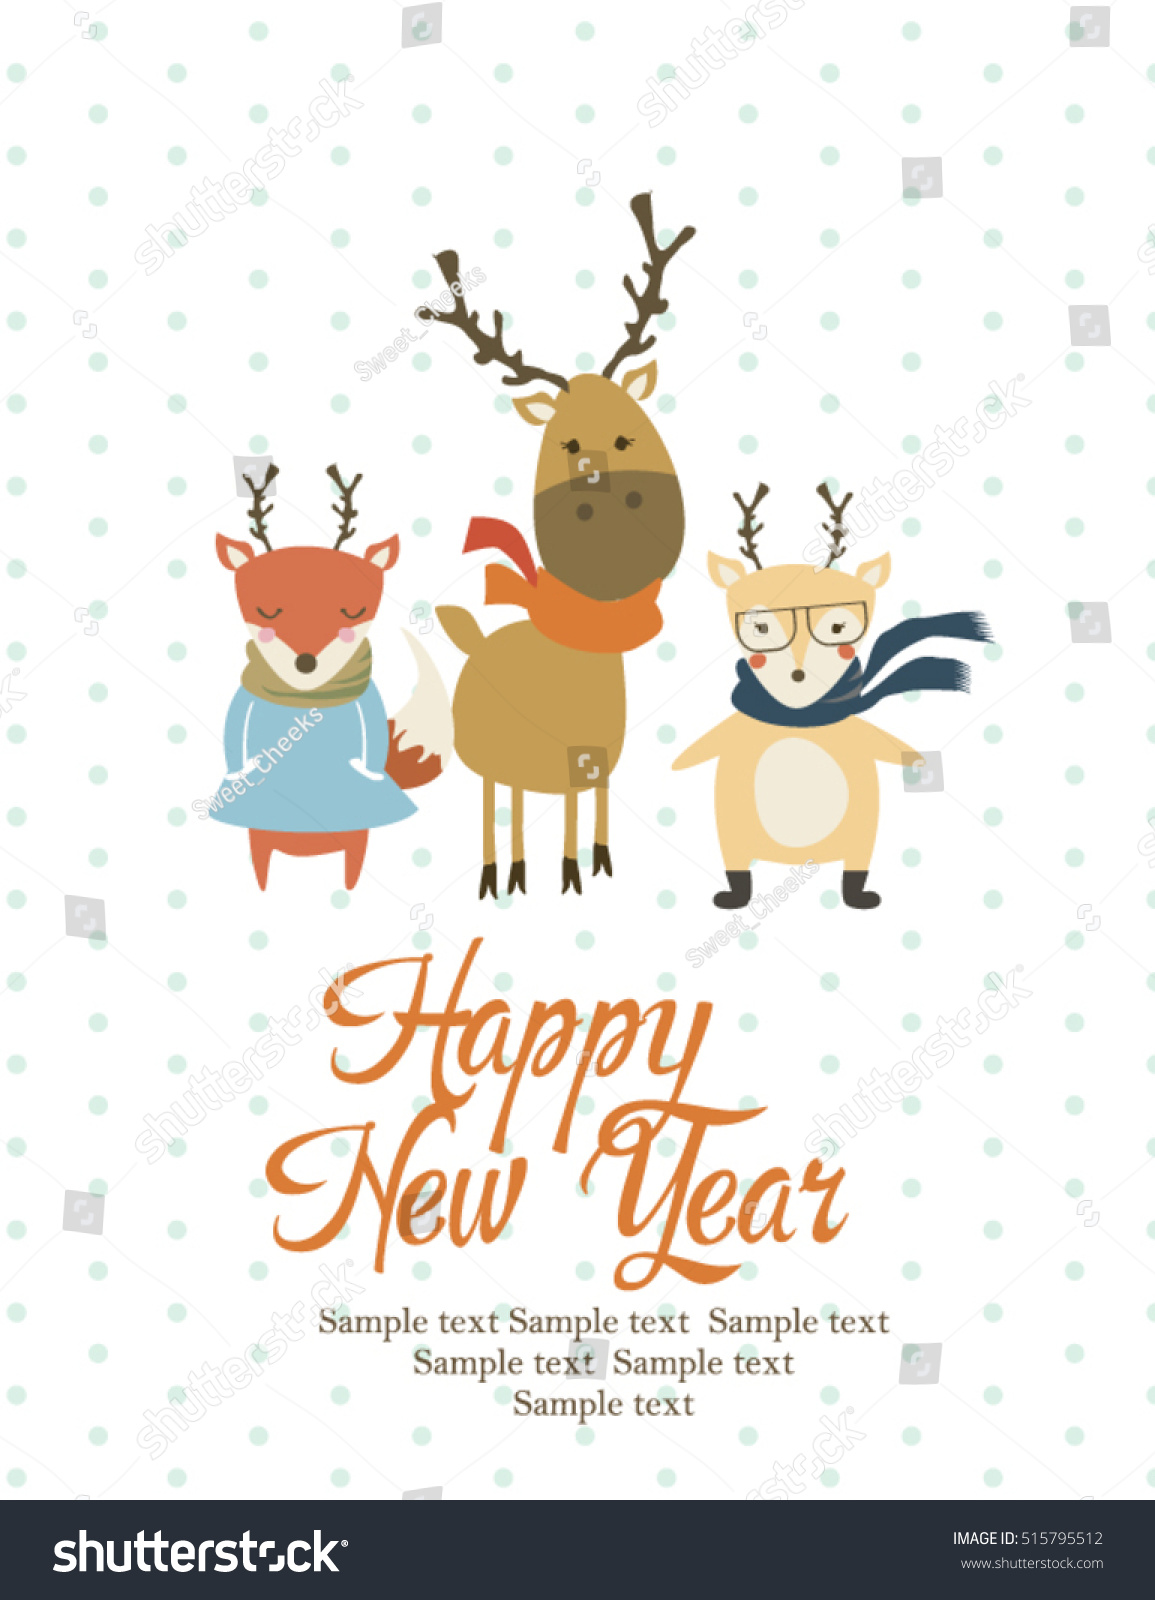 Happy New Year Invitation Card Stock Vector Illustration 515795512